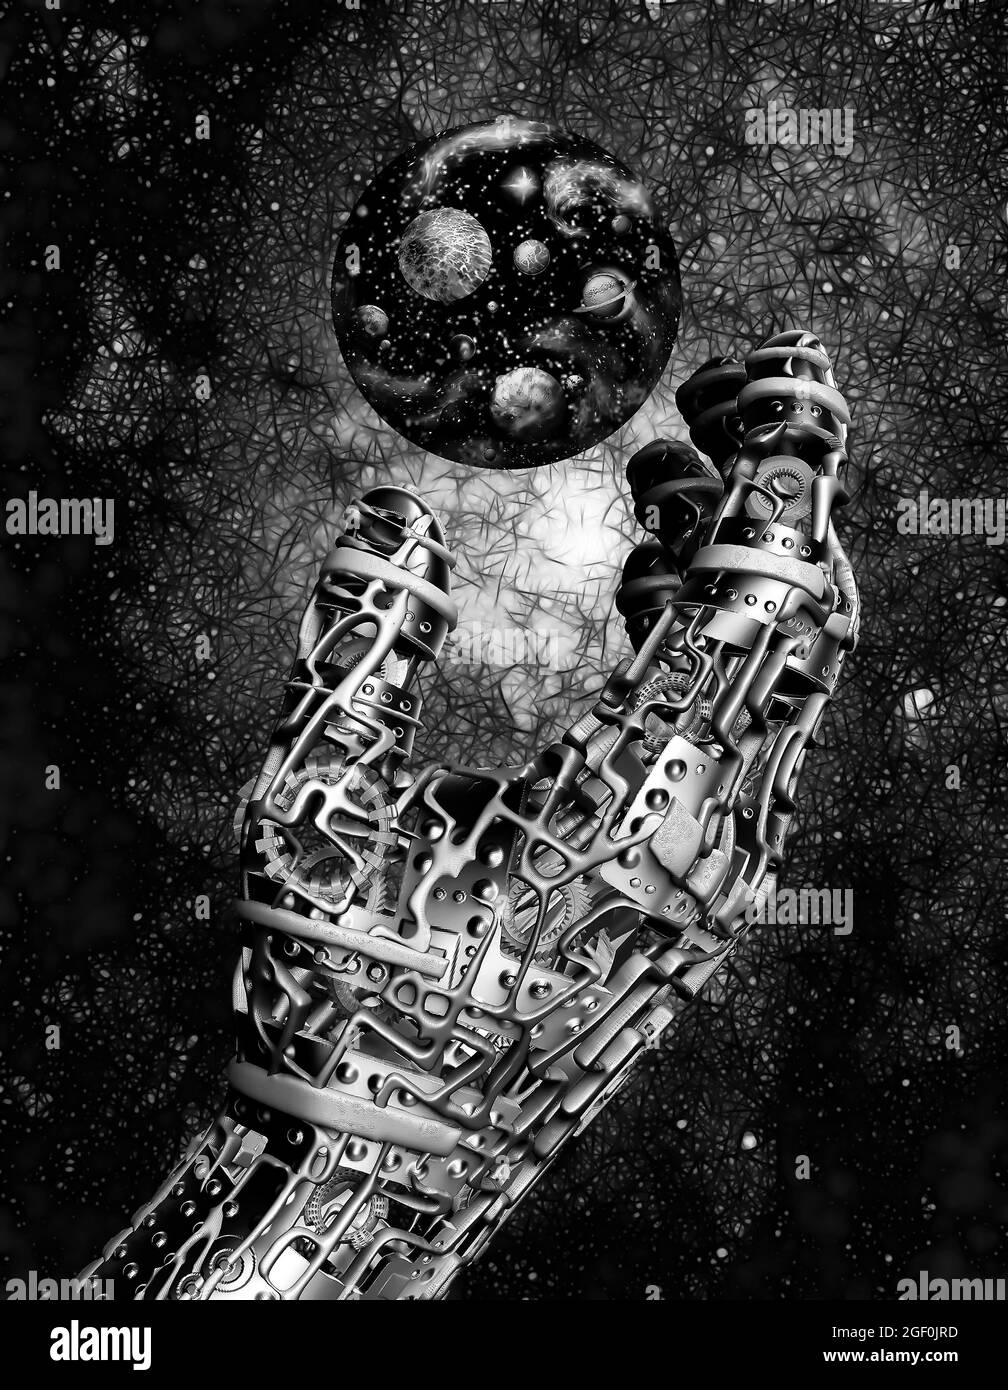 Illustrations Hand Robot Science Fiction Space Universe Alien Mechanical Art Stock Photo Alamy